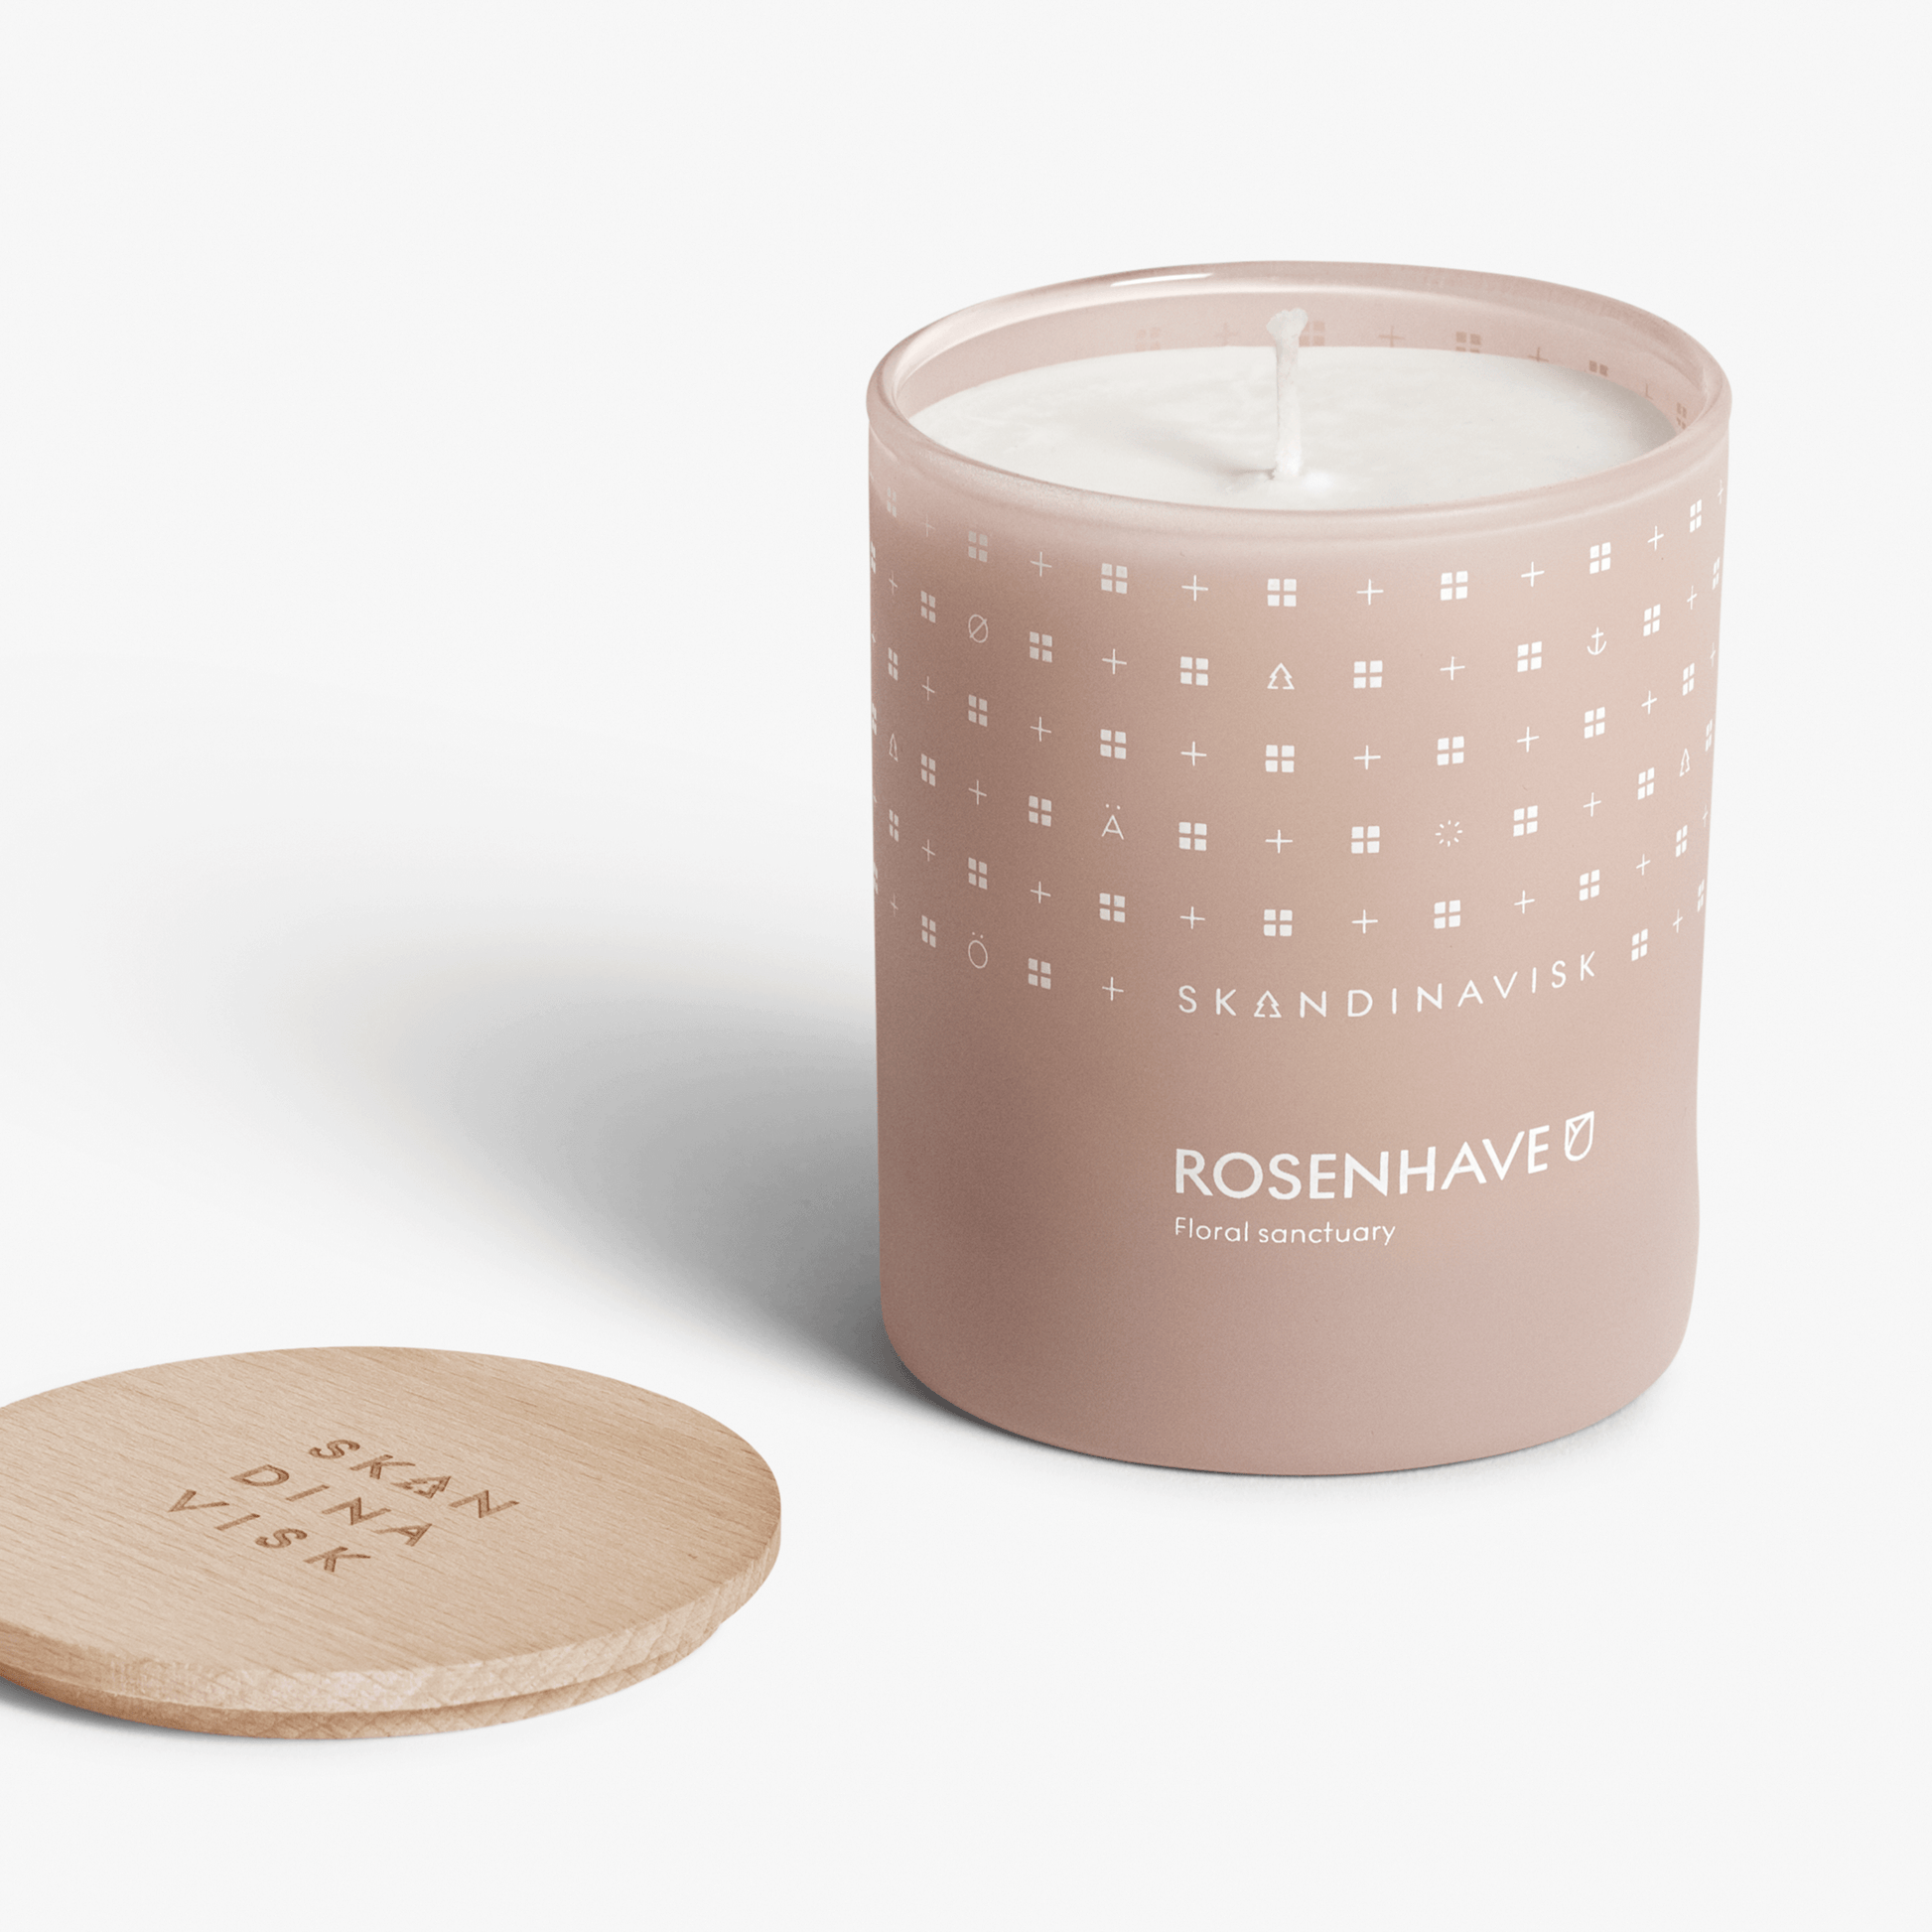 Skandinavisk ROSENHAVE Scented Candle - Osmology Scented Candles & Home Fragrance